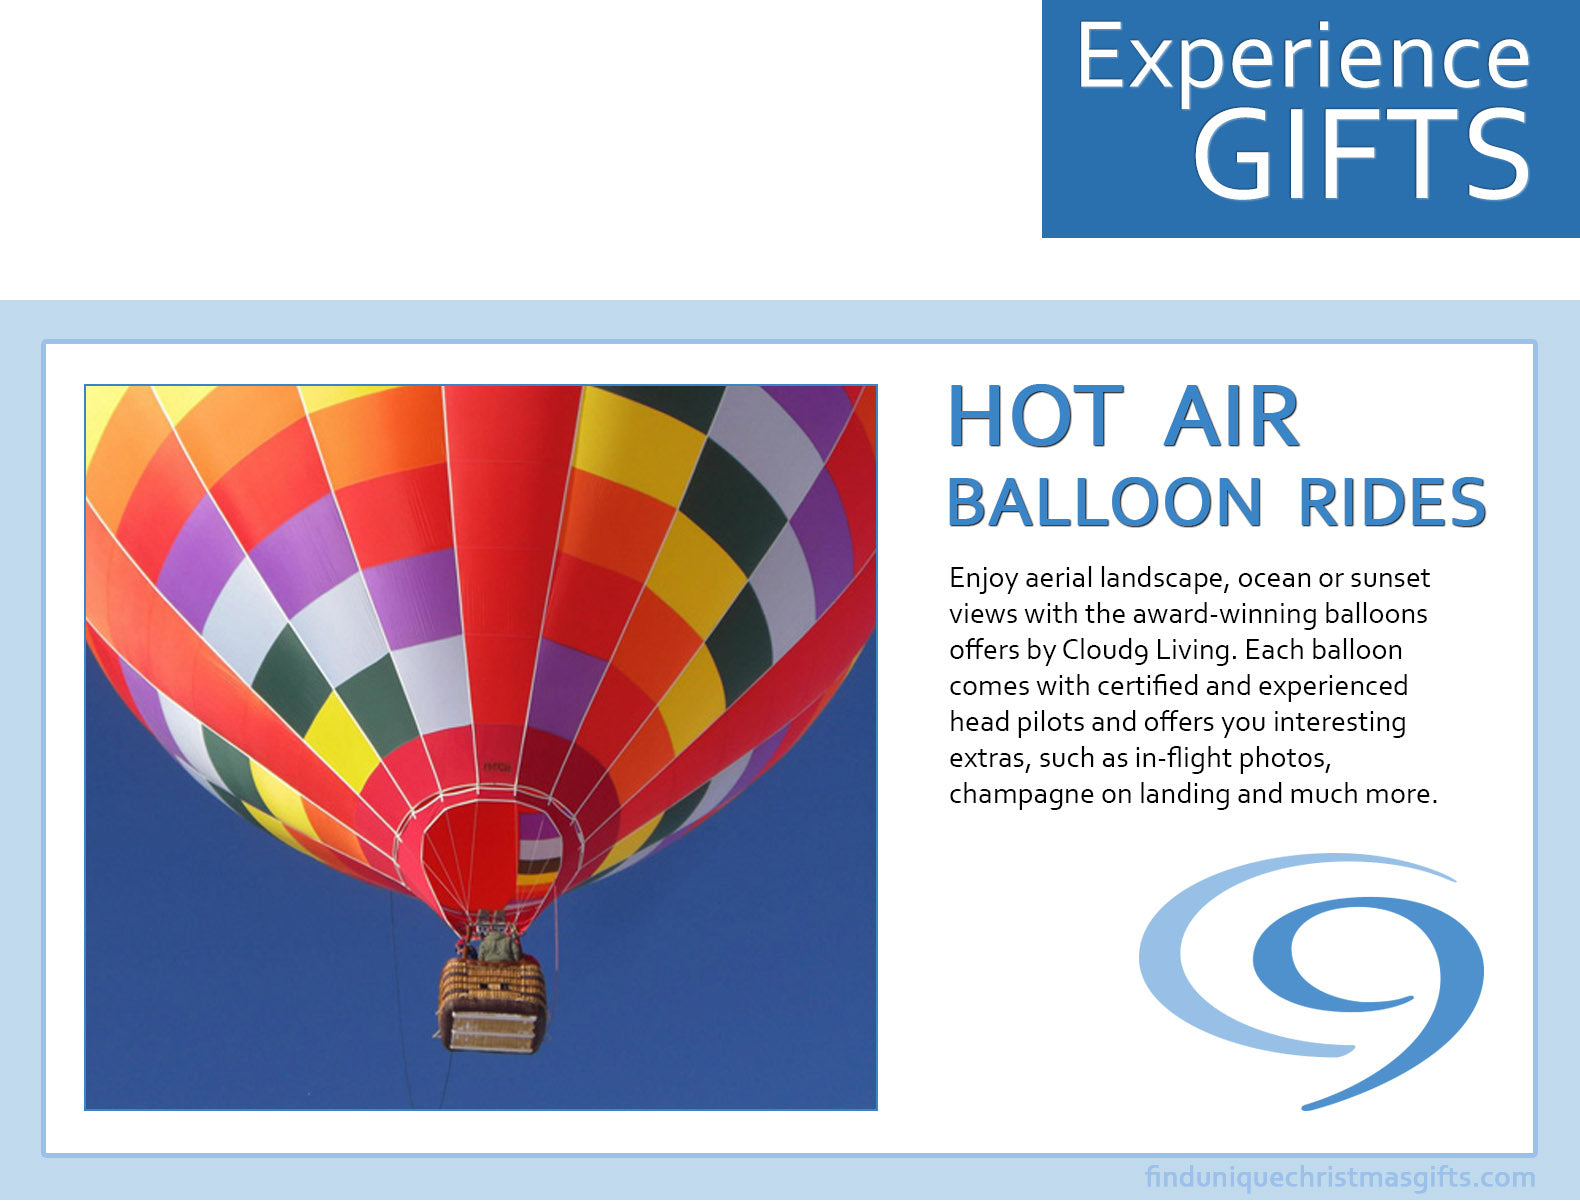 Hot Air Balloon Rides - Give a Shared 